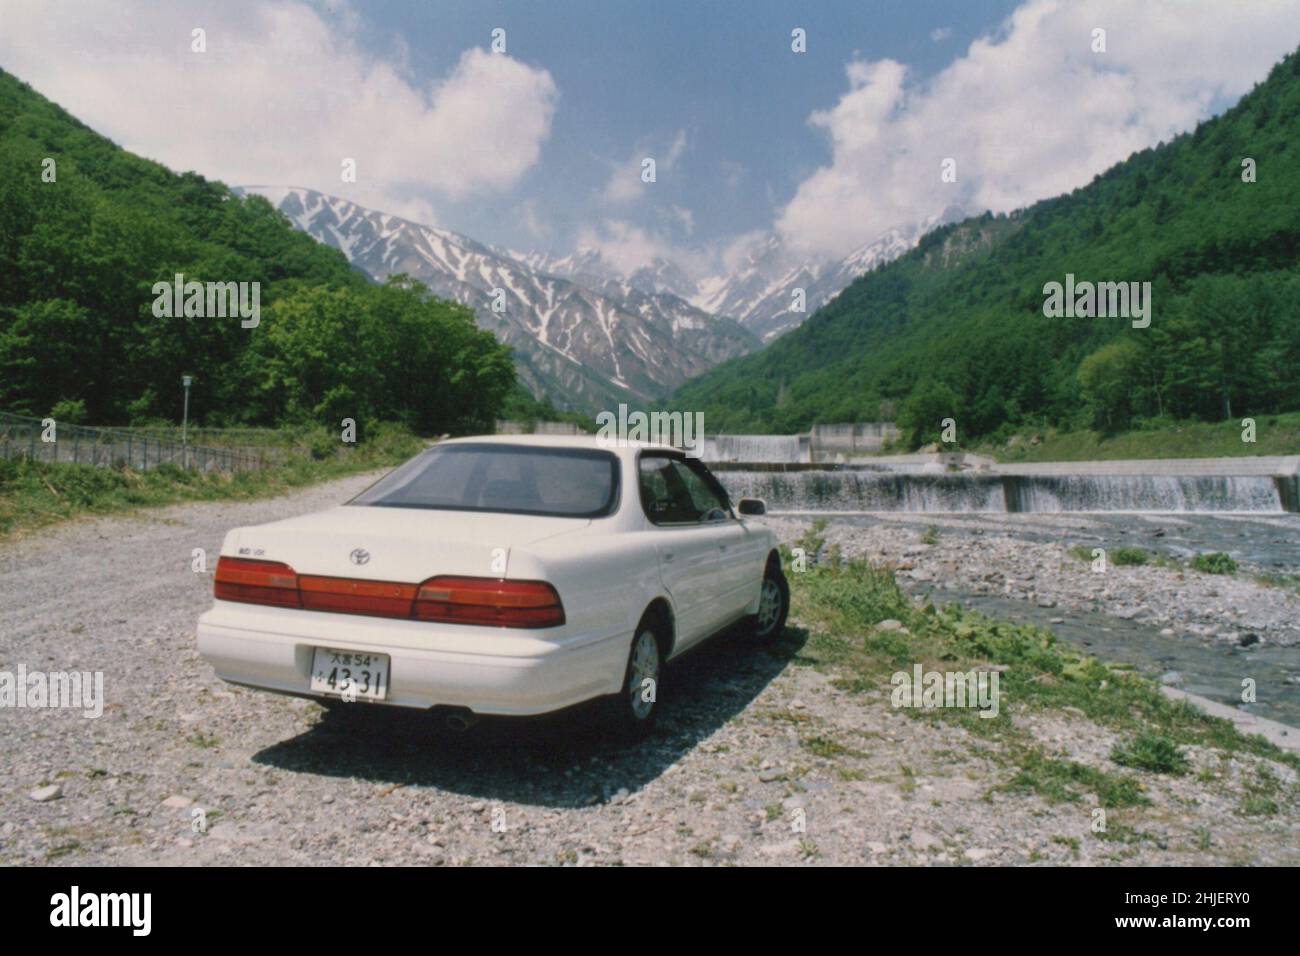 Toyota Car Vista. Scanned Copy of Archival Photo Stock Photo